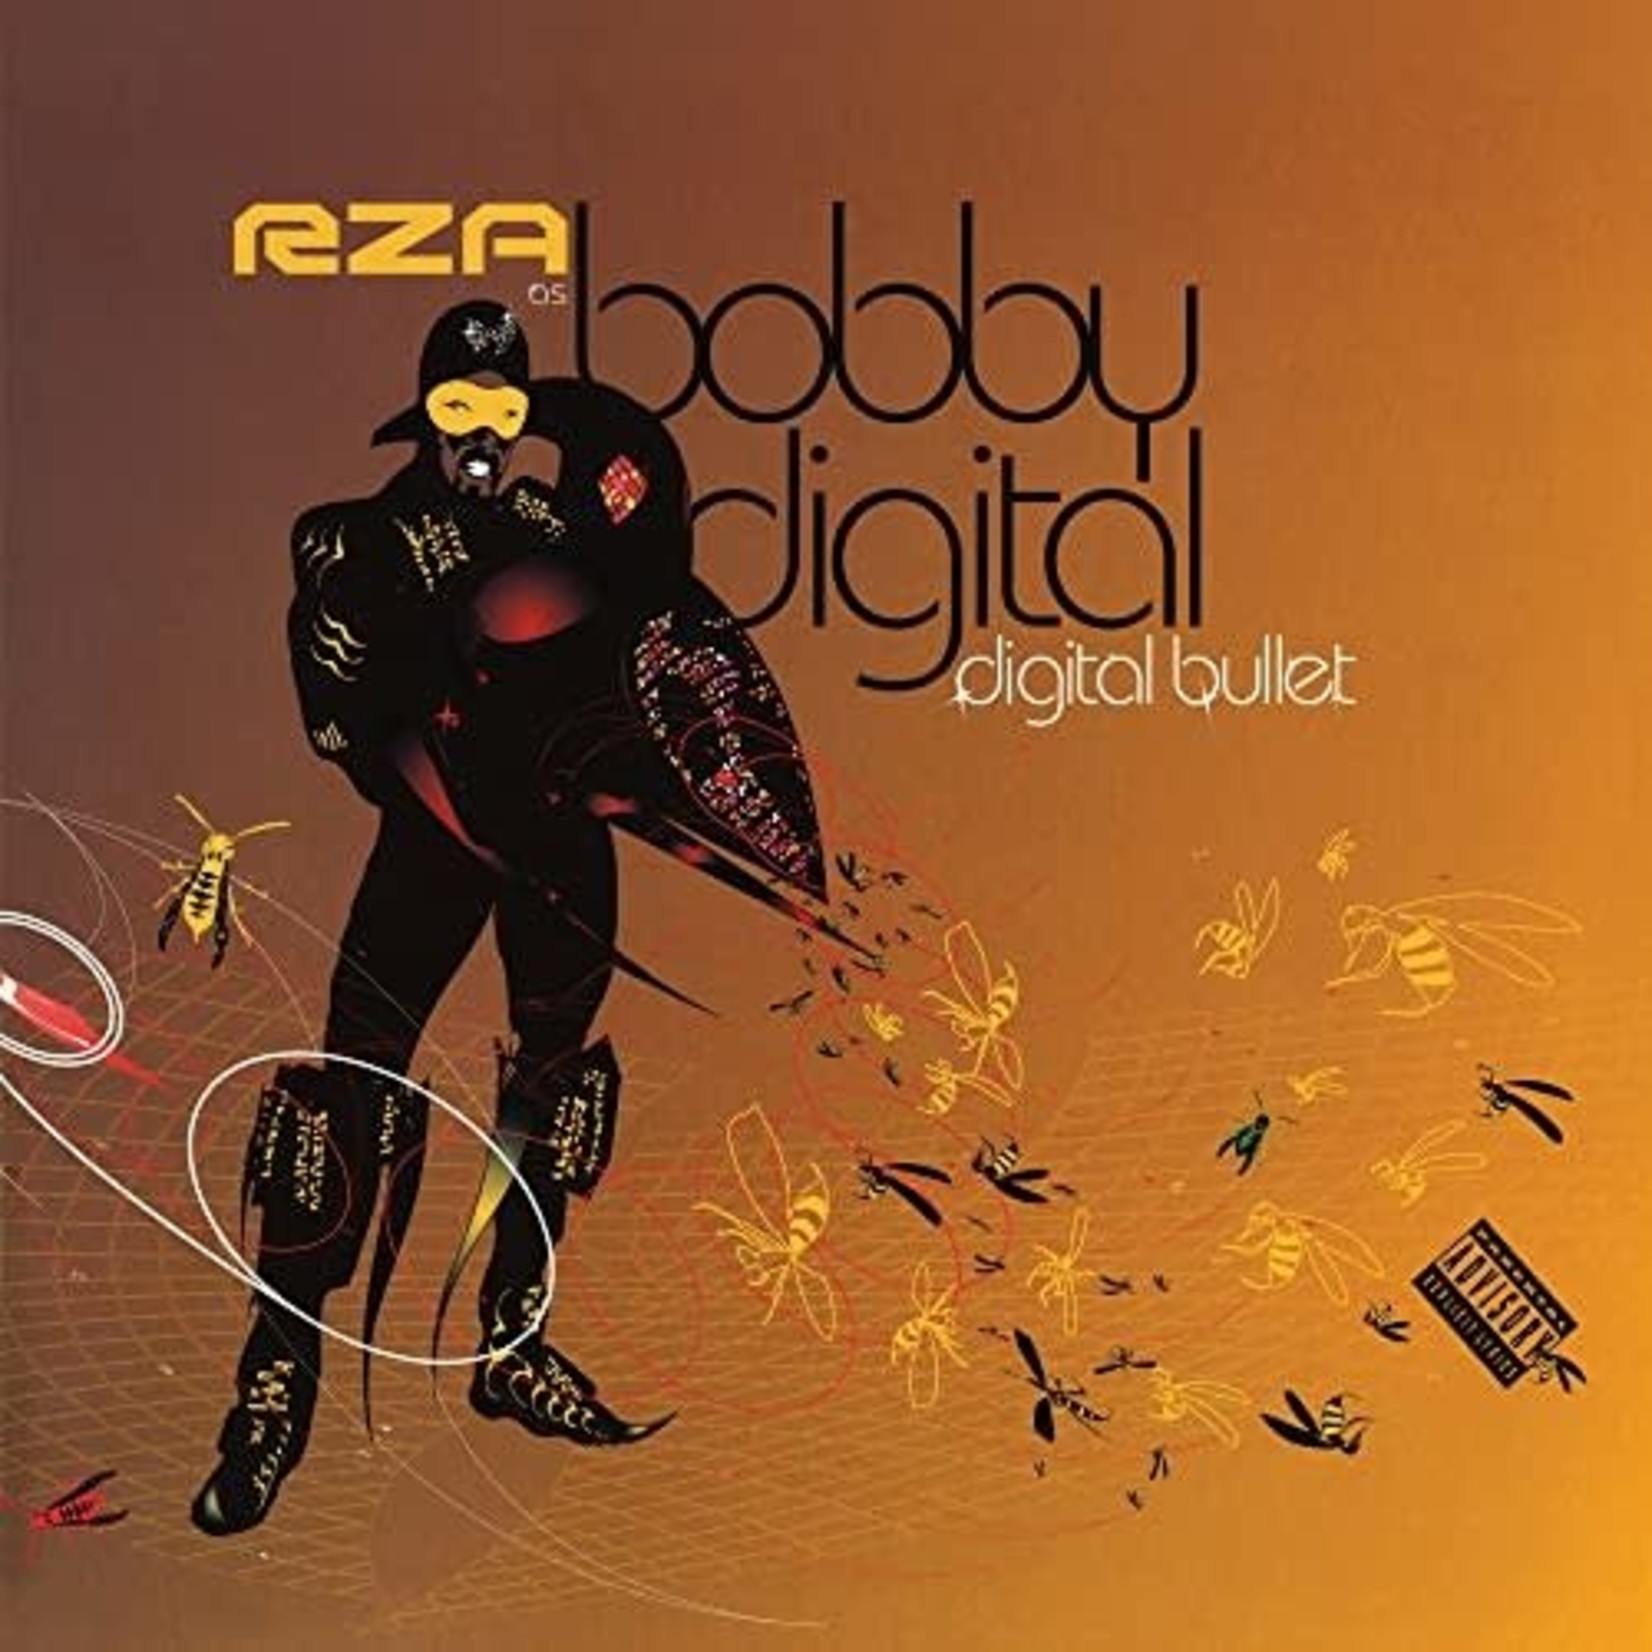 [New] RZA as Bobby Digital - Digital Bullet (2LP)